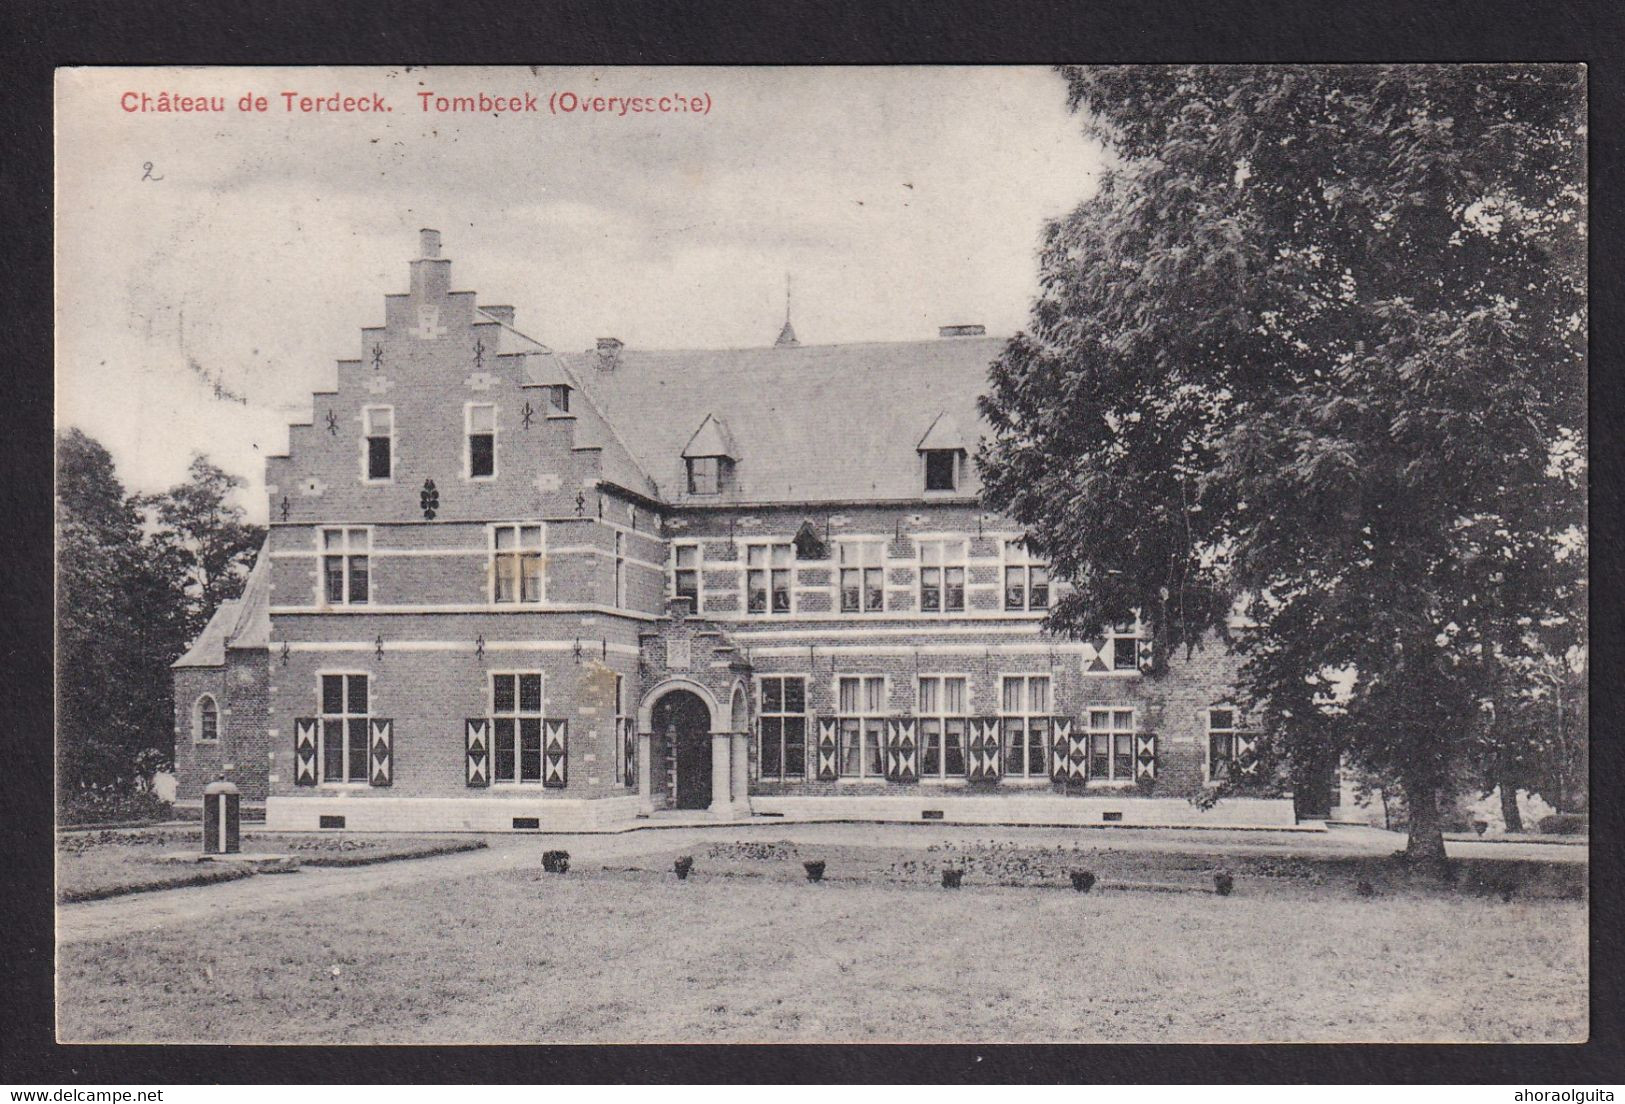 DDBB 886 - Carte-Vue OVERYSSCHE - Chateau De Terdeck à TOMBEEK, Photo Van Grinderbeek , Leuven - Circulée - Overijse